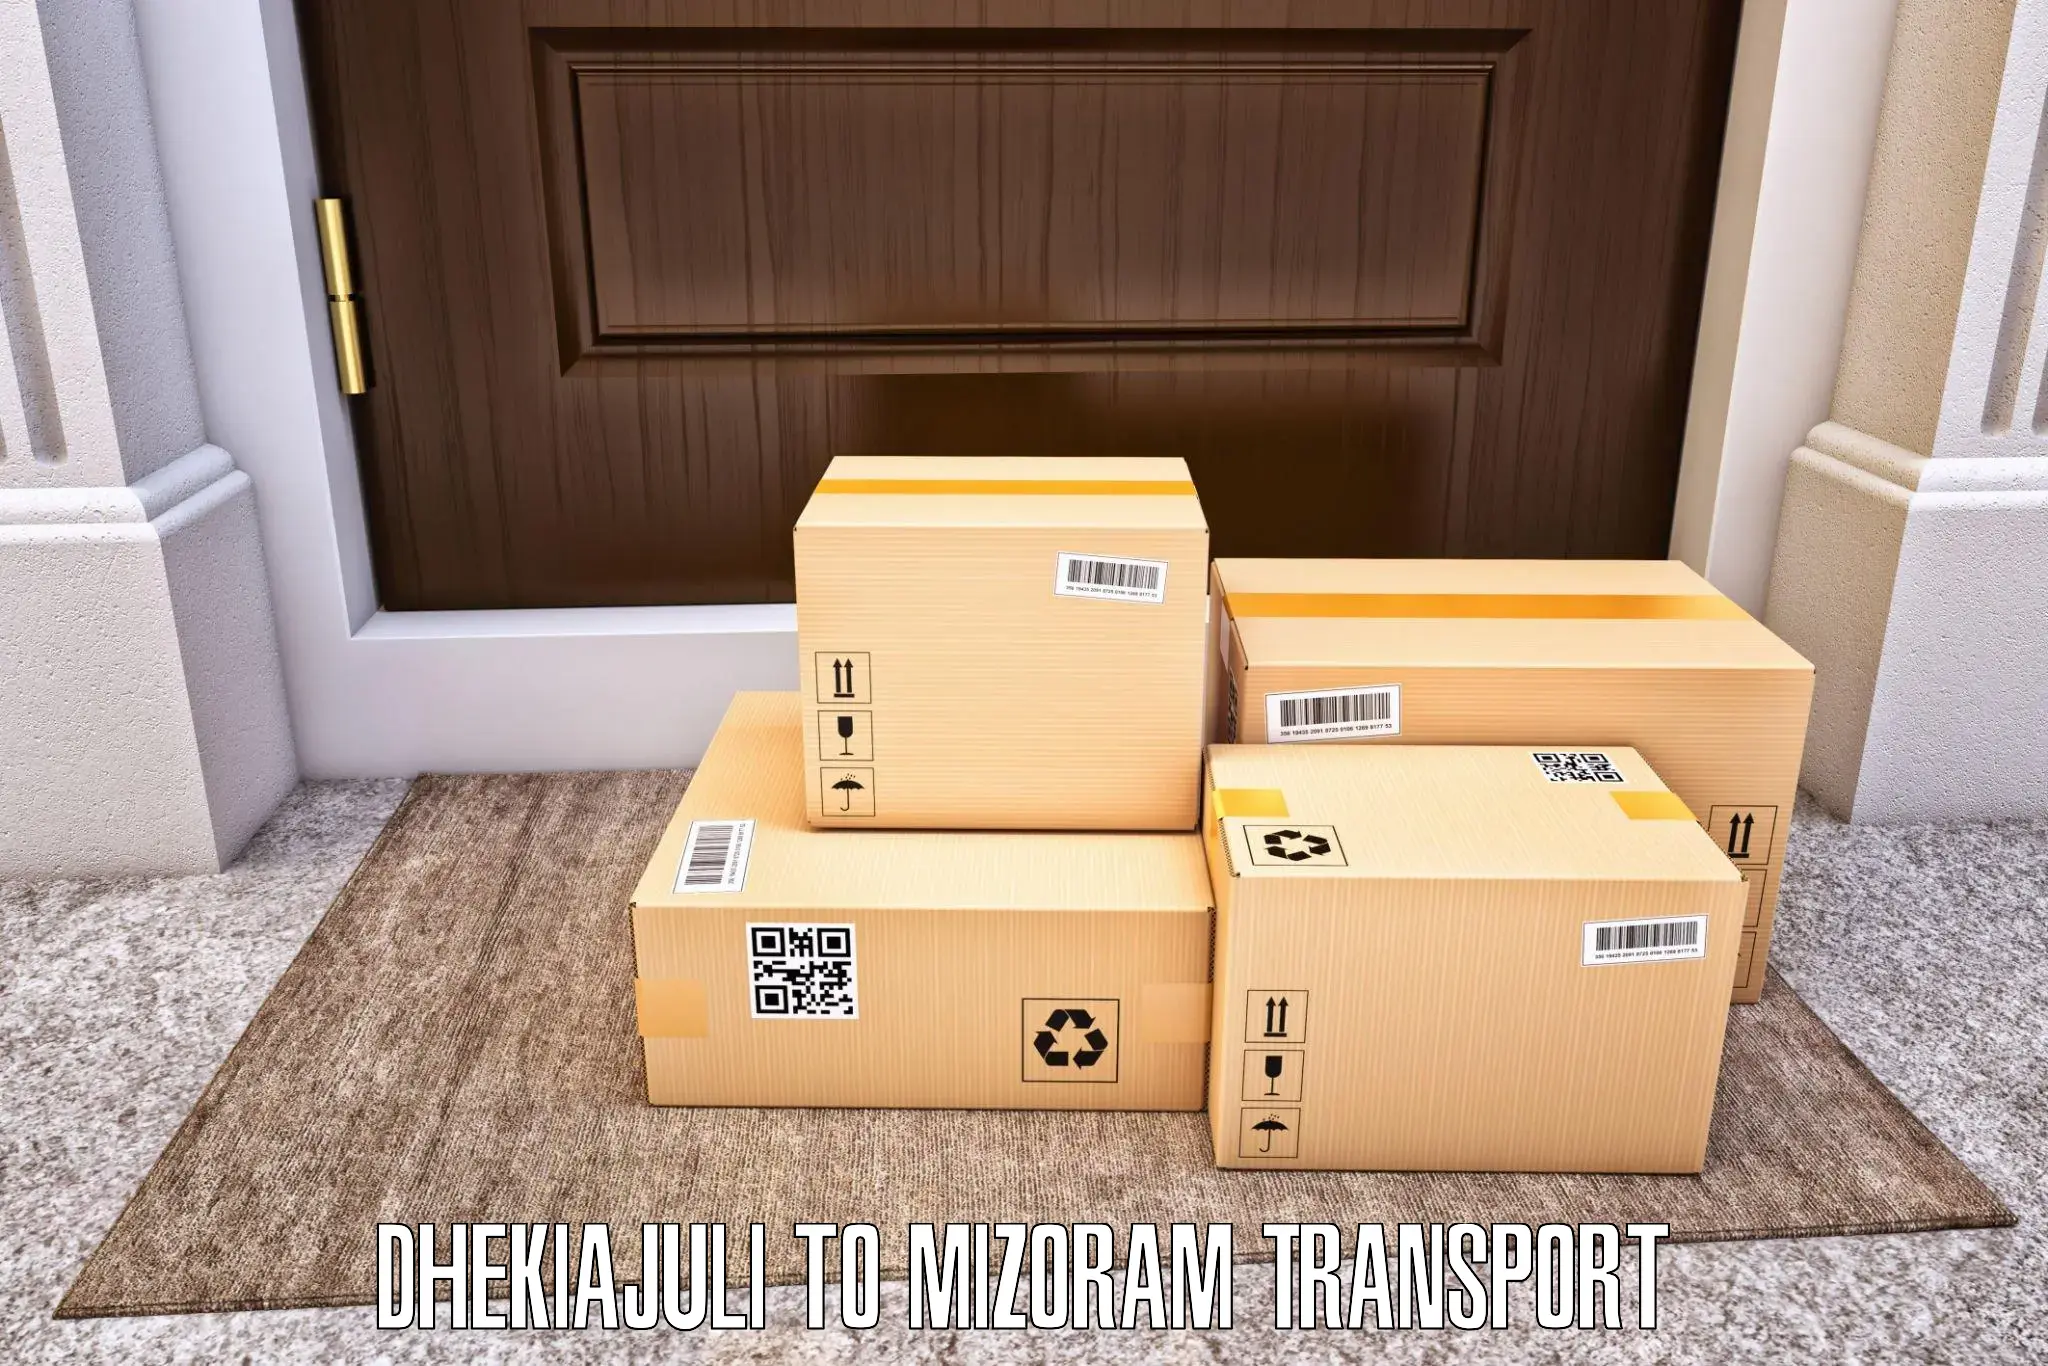 Transport shared services Dhekiajuli to Mizoram